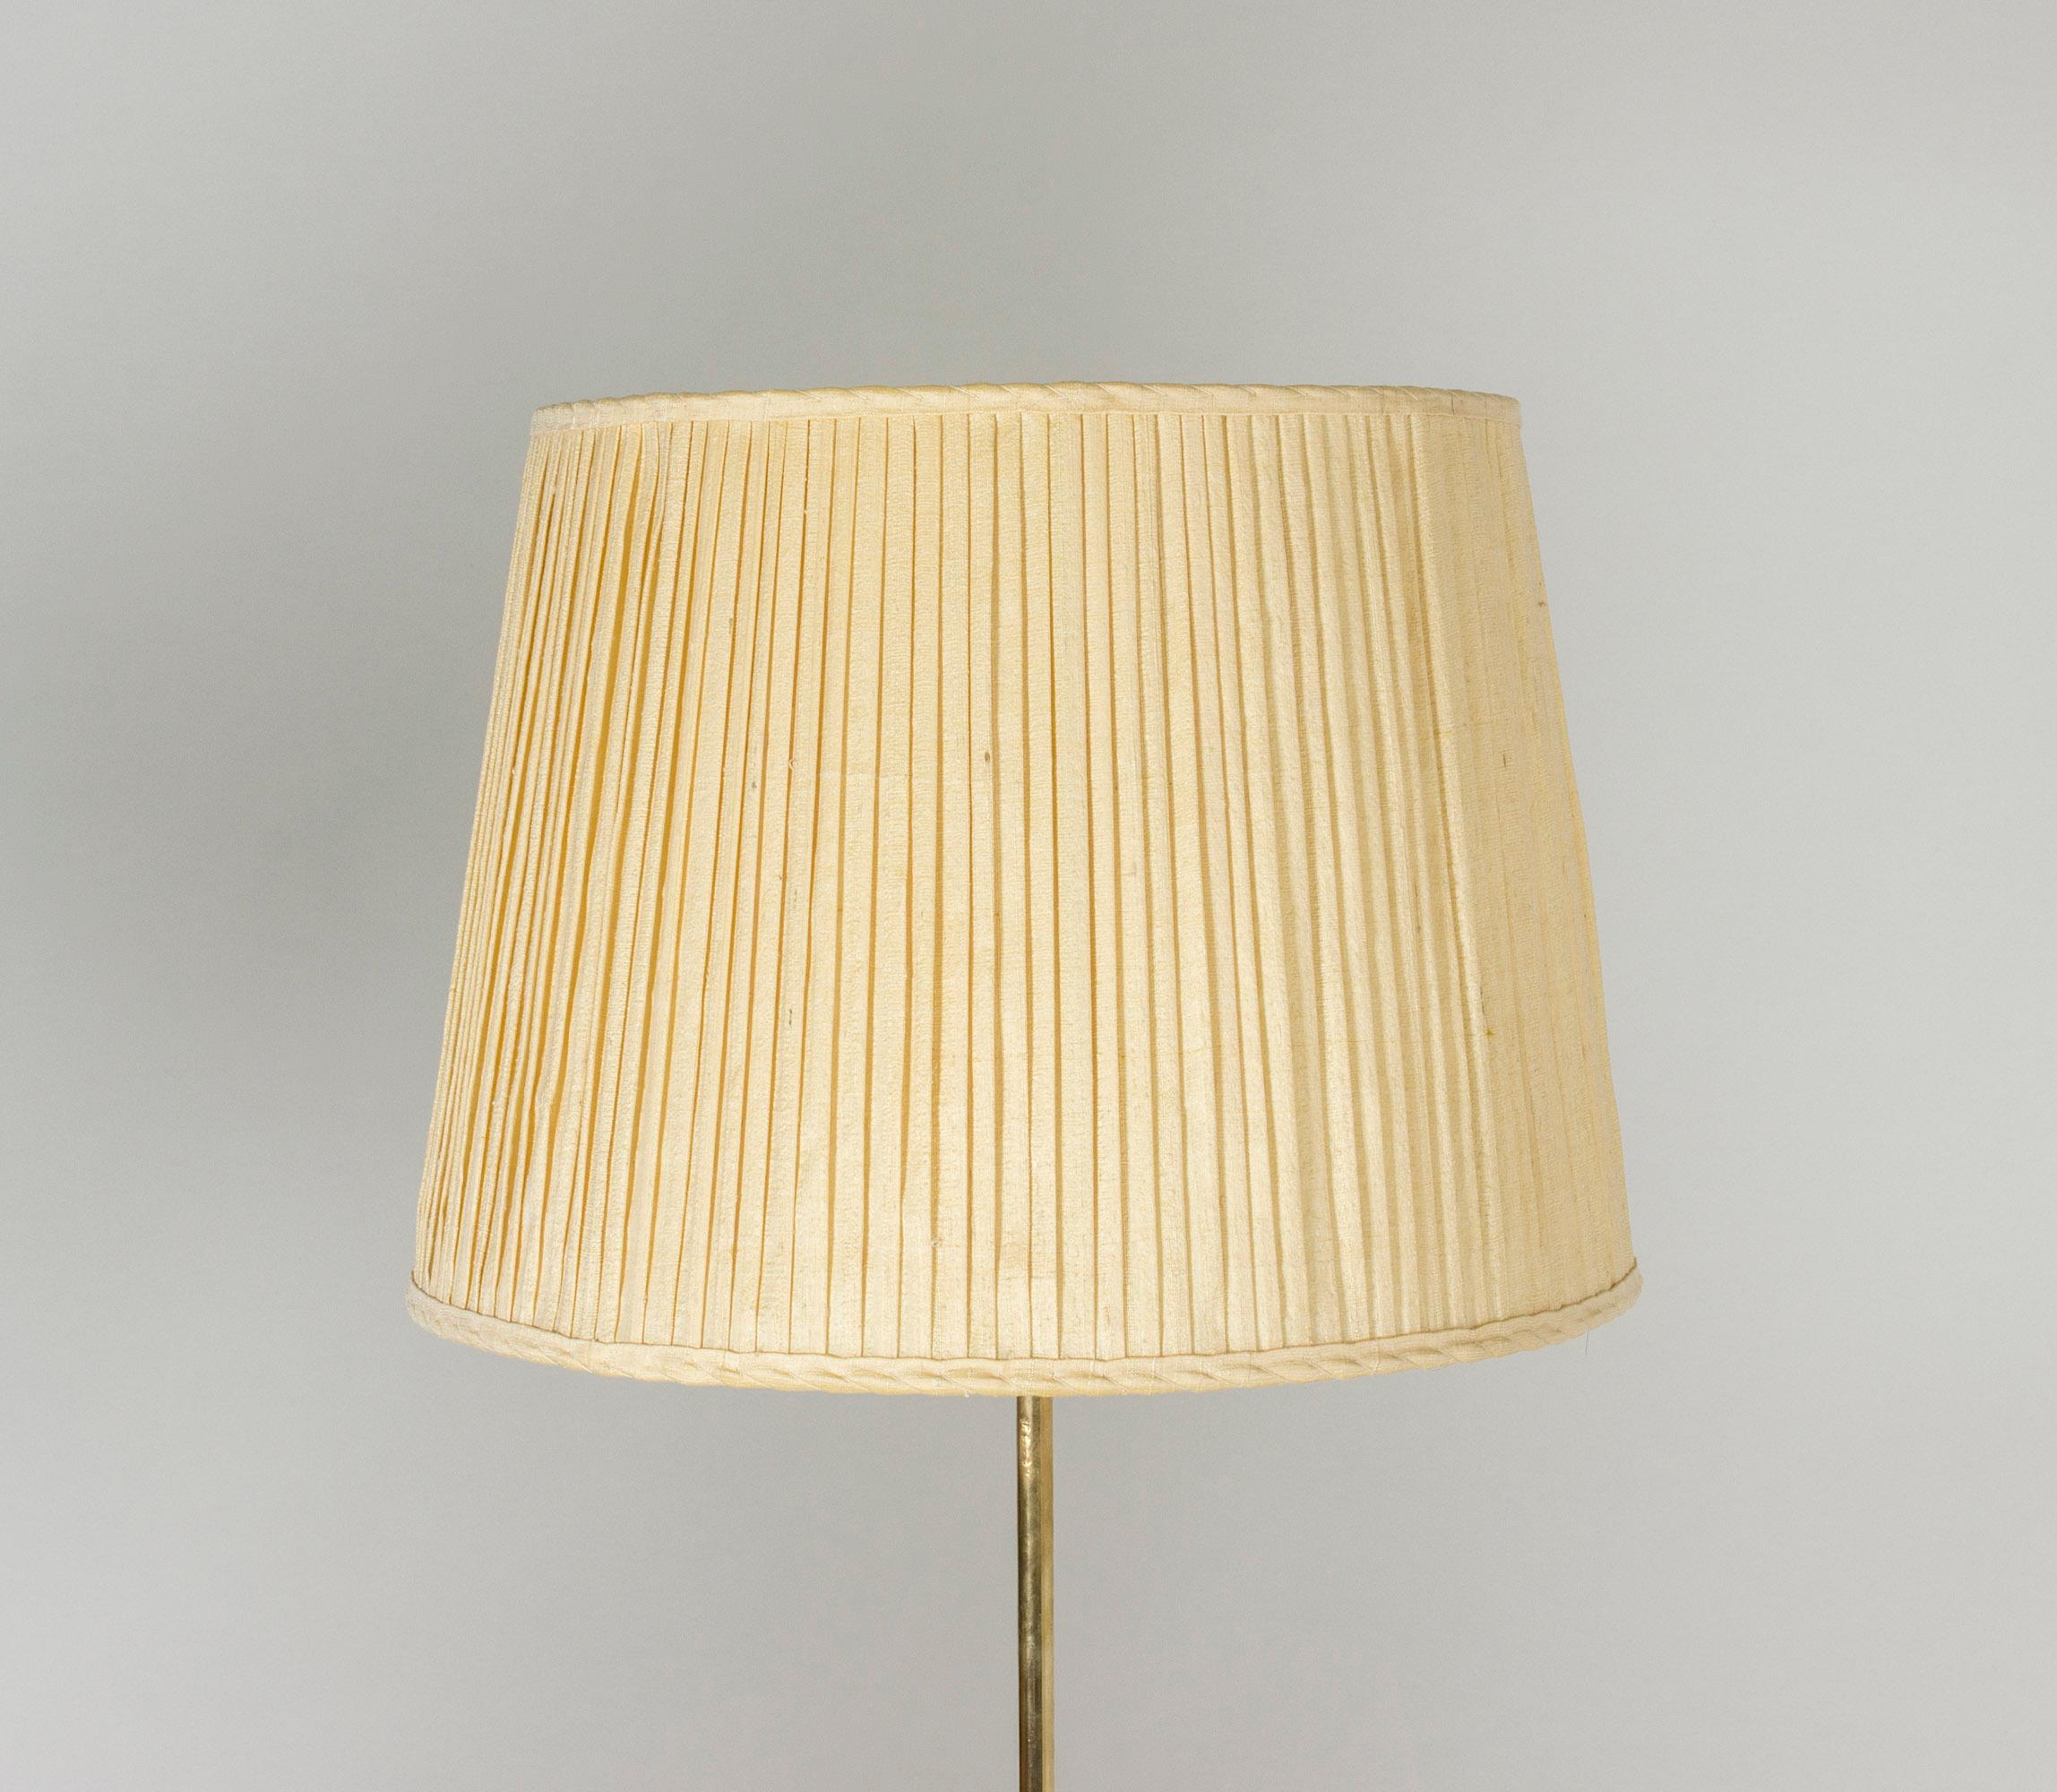 Elegant brass floor lamp by Josef Frank with adjustable height. Original plissé silk lamp shade.